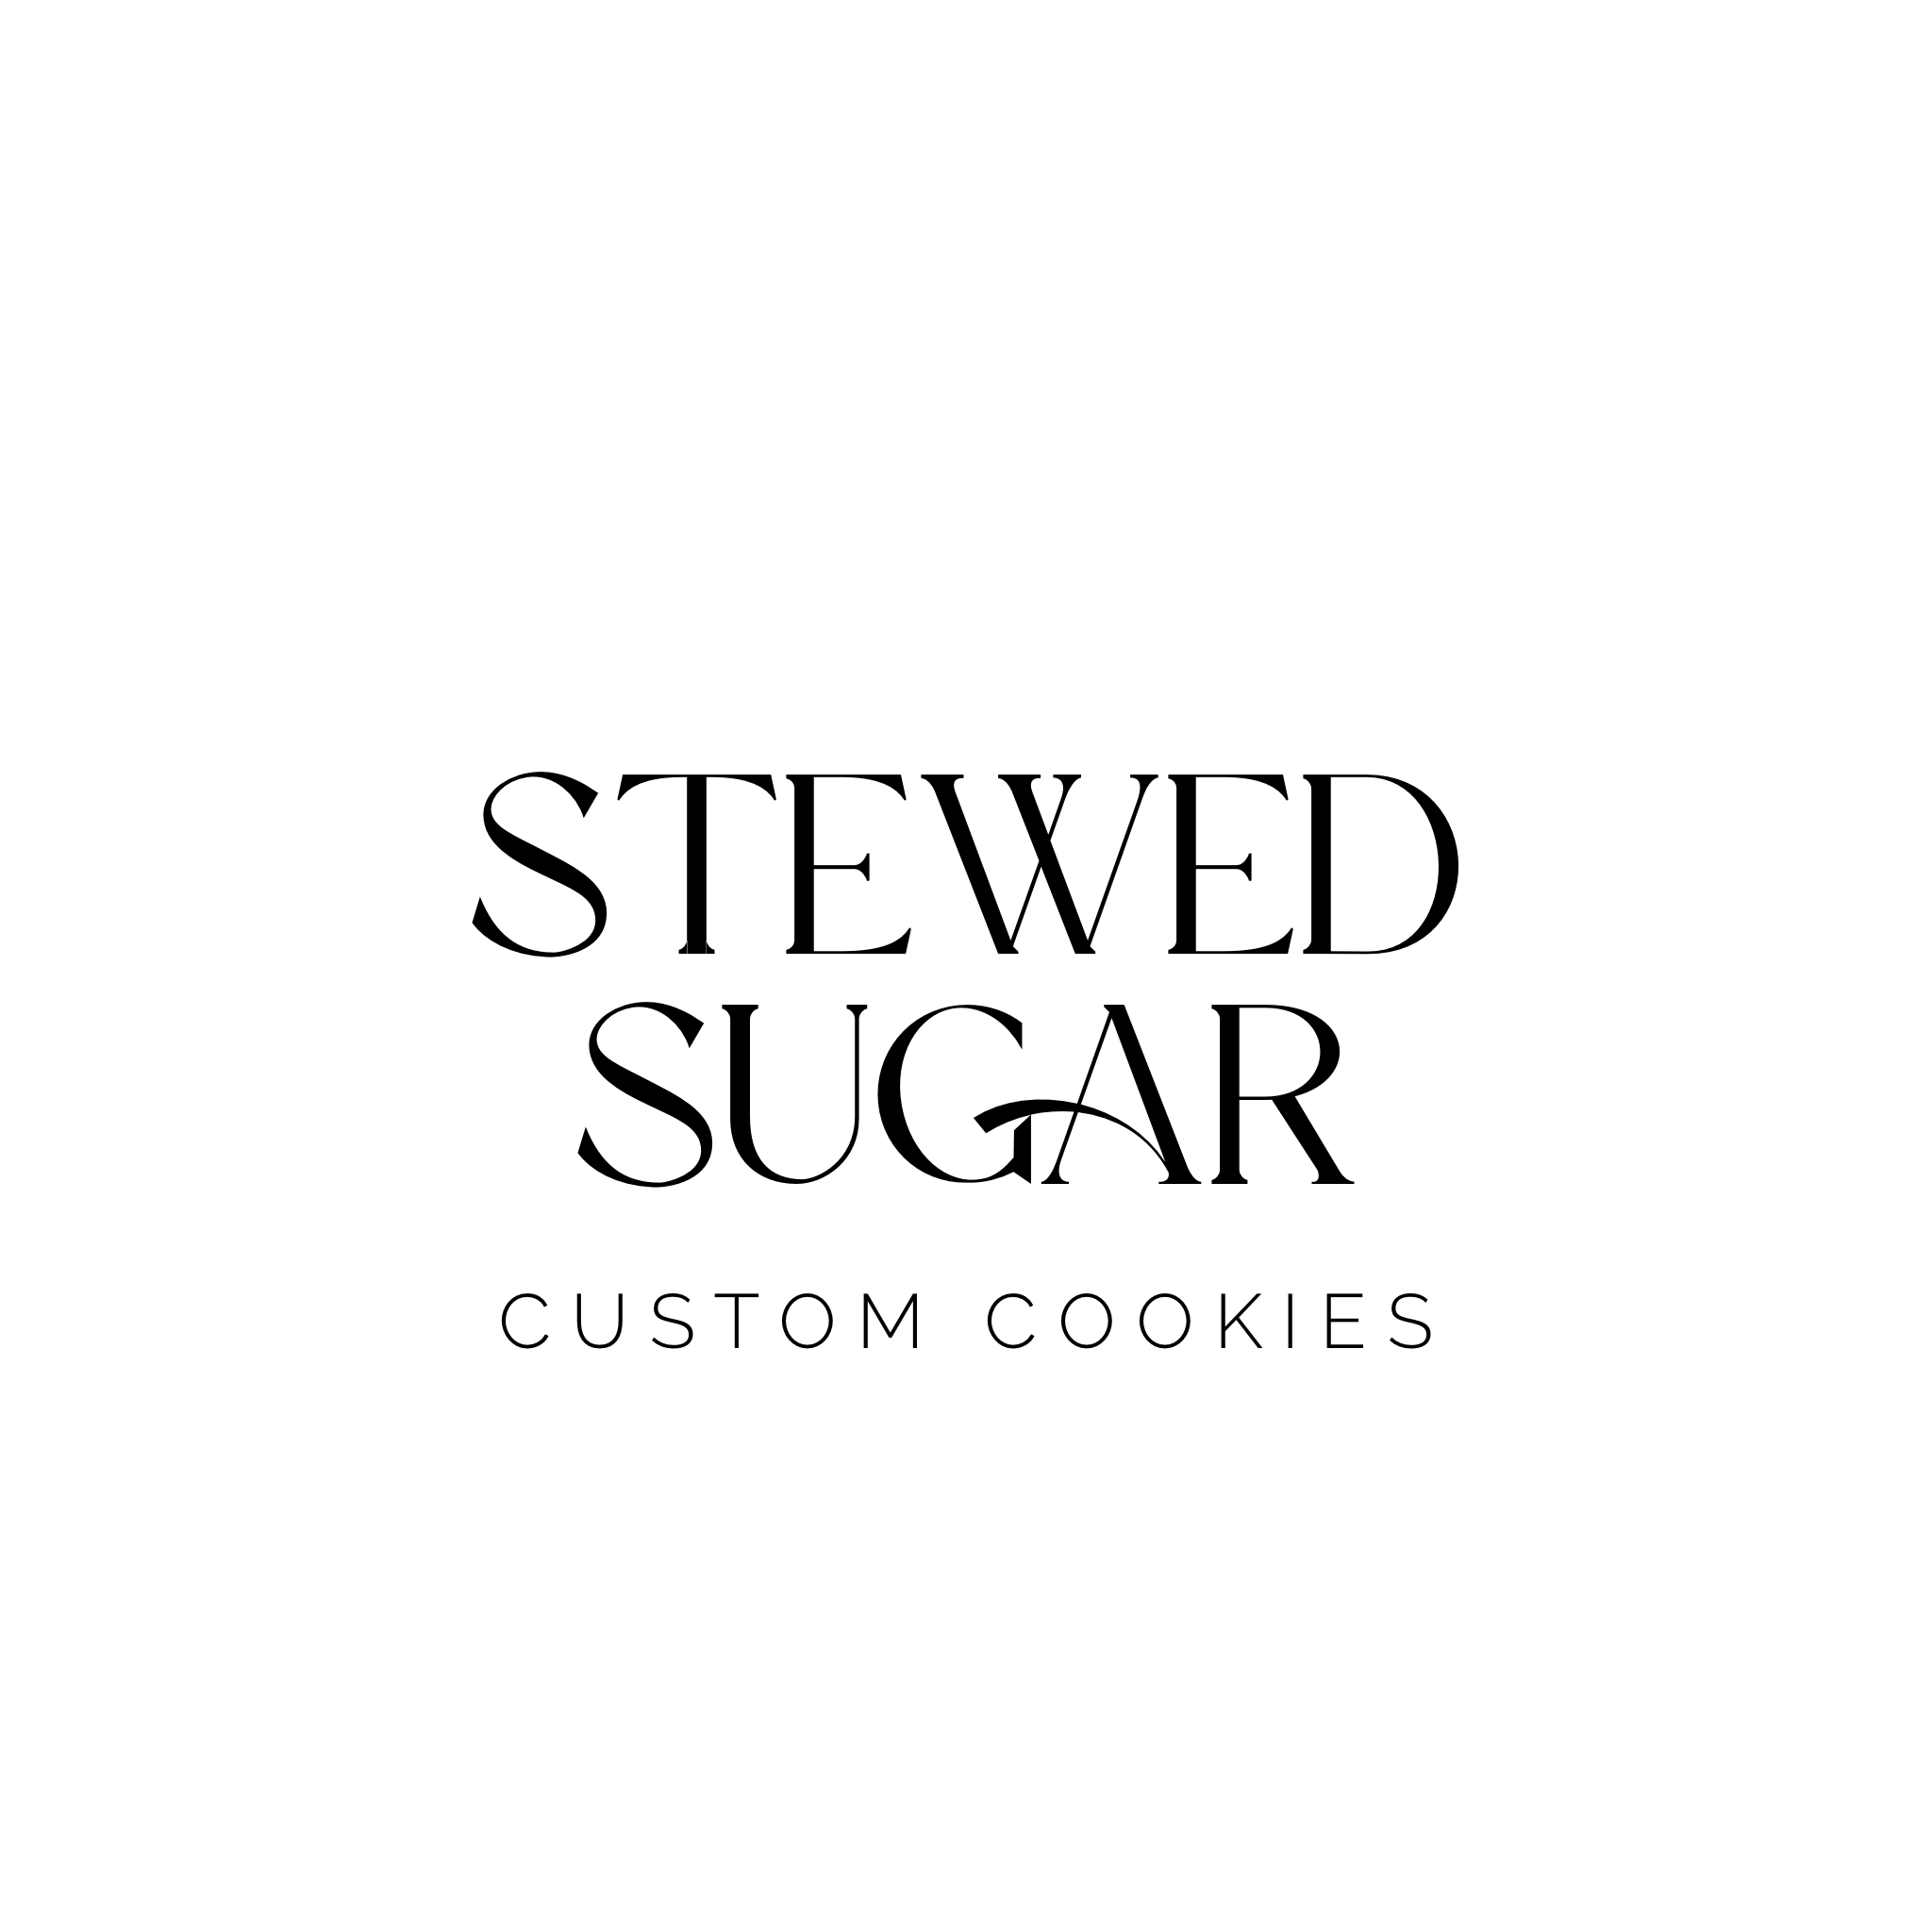 Free Sugar Logo PNG Transparent & SVG Vector - Freebie Supply